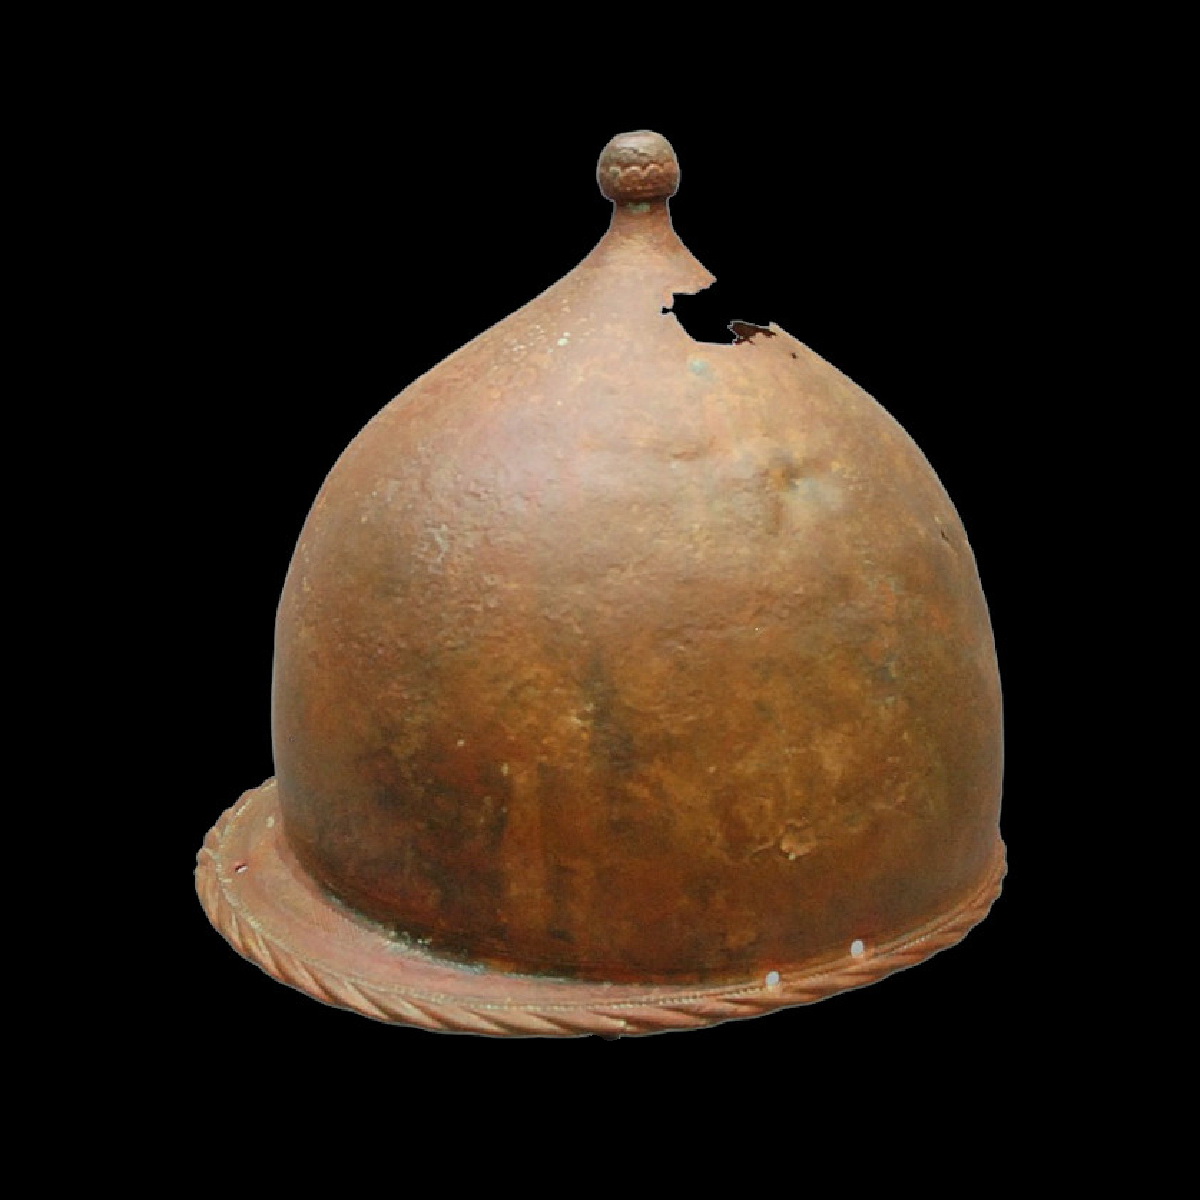 A Montefortino helmet, Holy Roman Empire, 3rd century BC - 1st century AD.